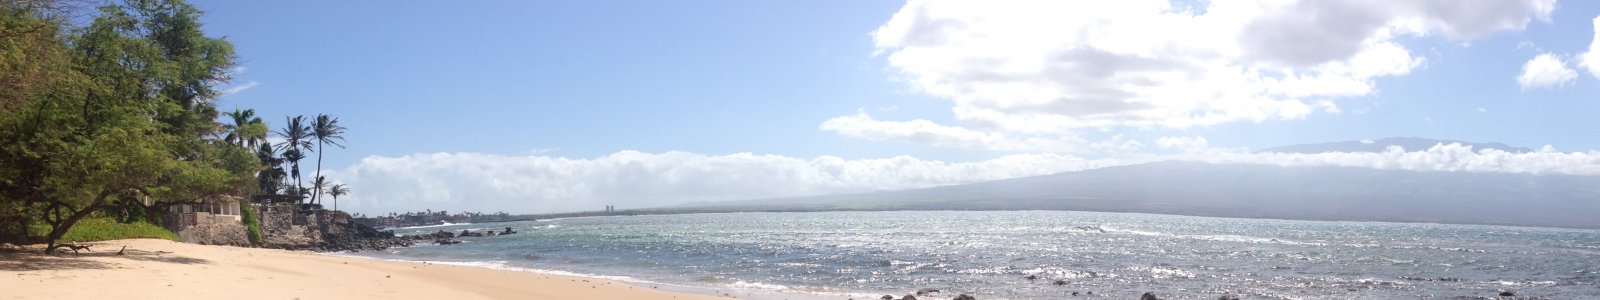 Exotic Estates Maui Beach Guide